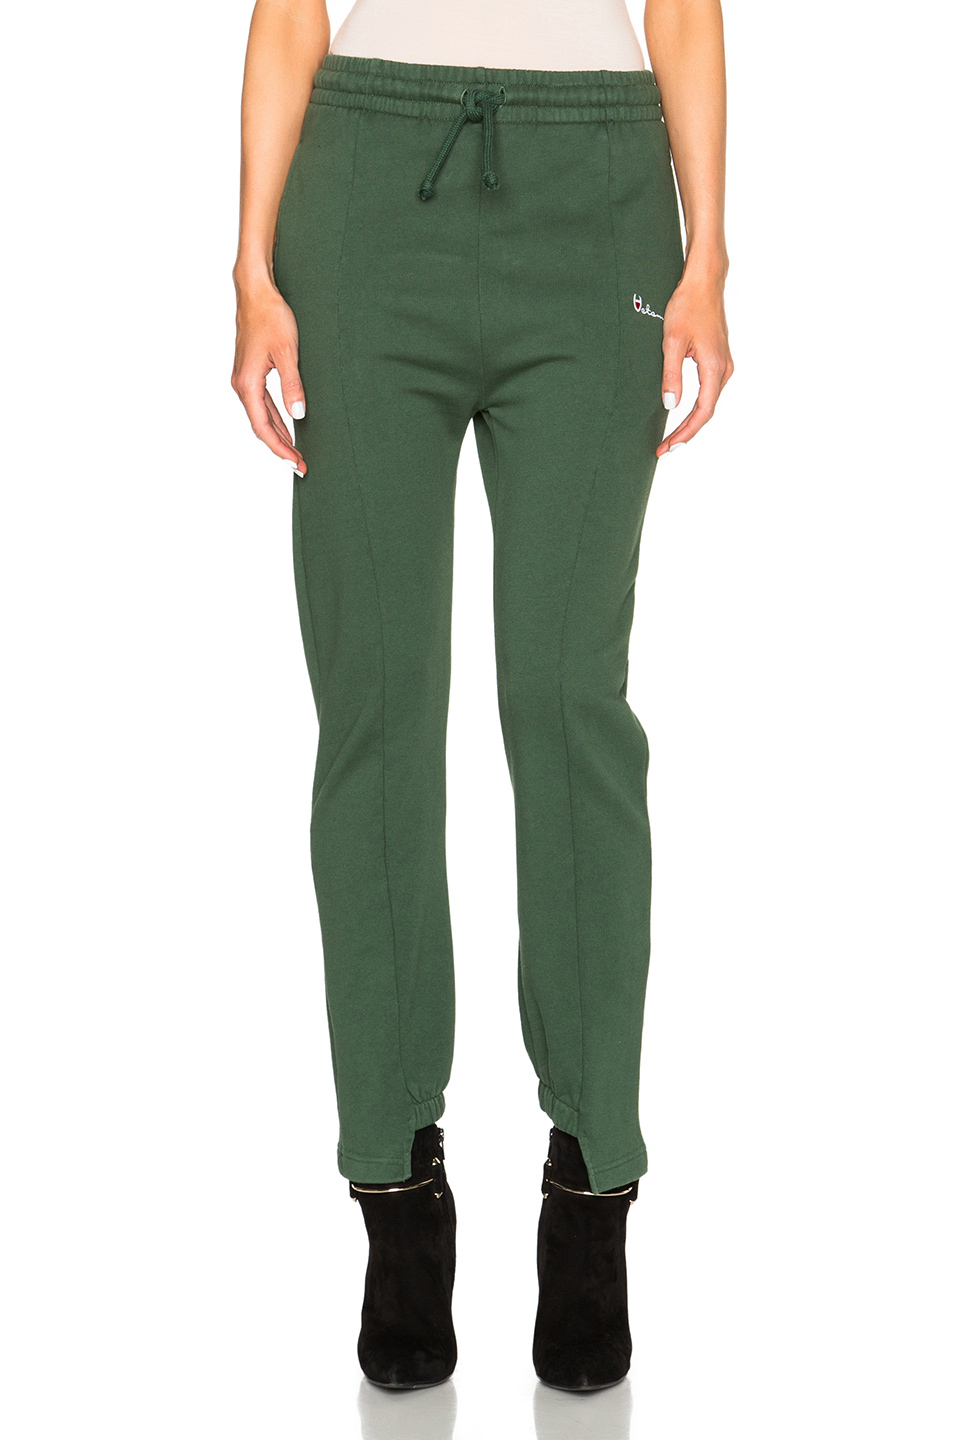 JACADI Girl's Aviser Green Sweatpants Size 2 Years NEW $42 